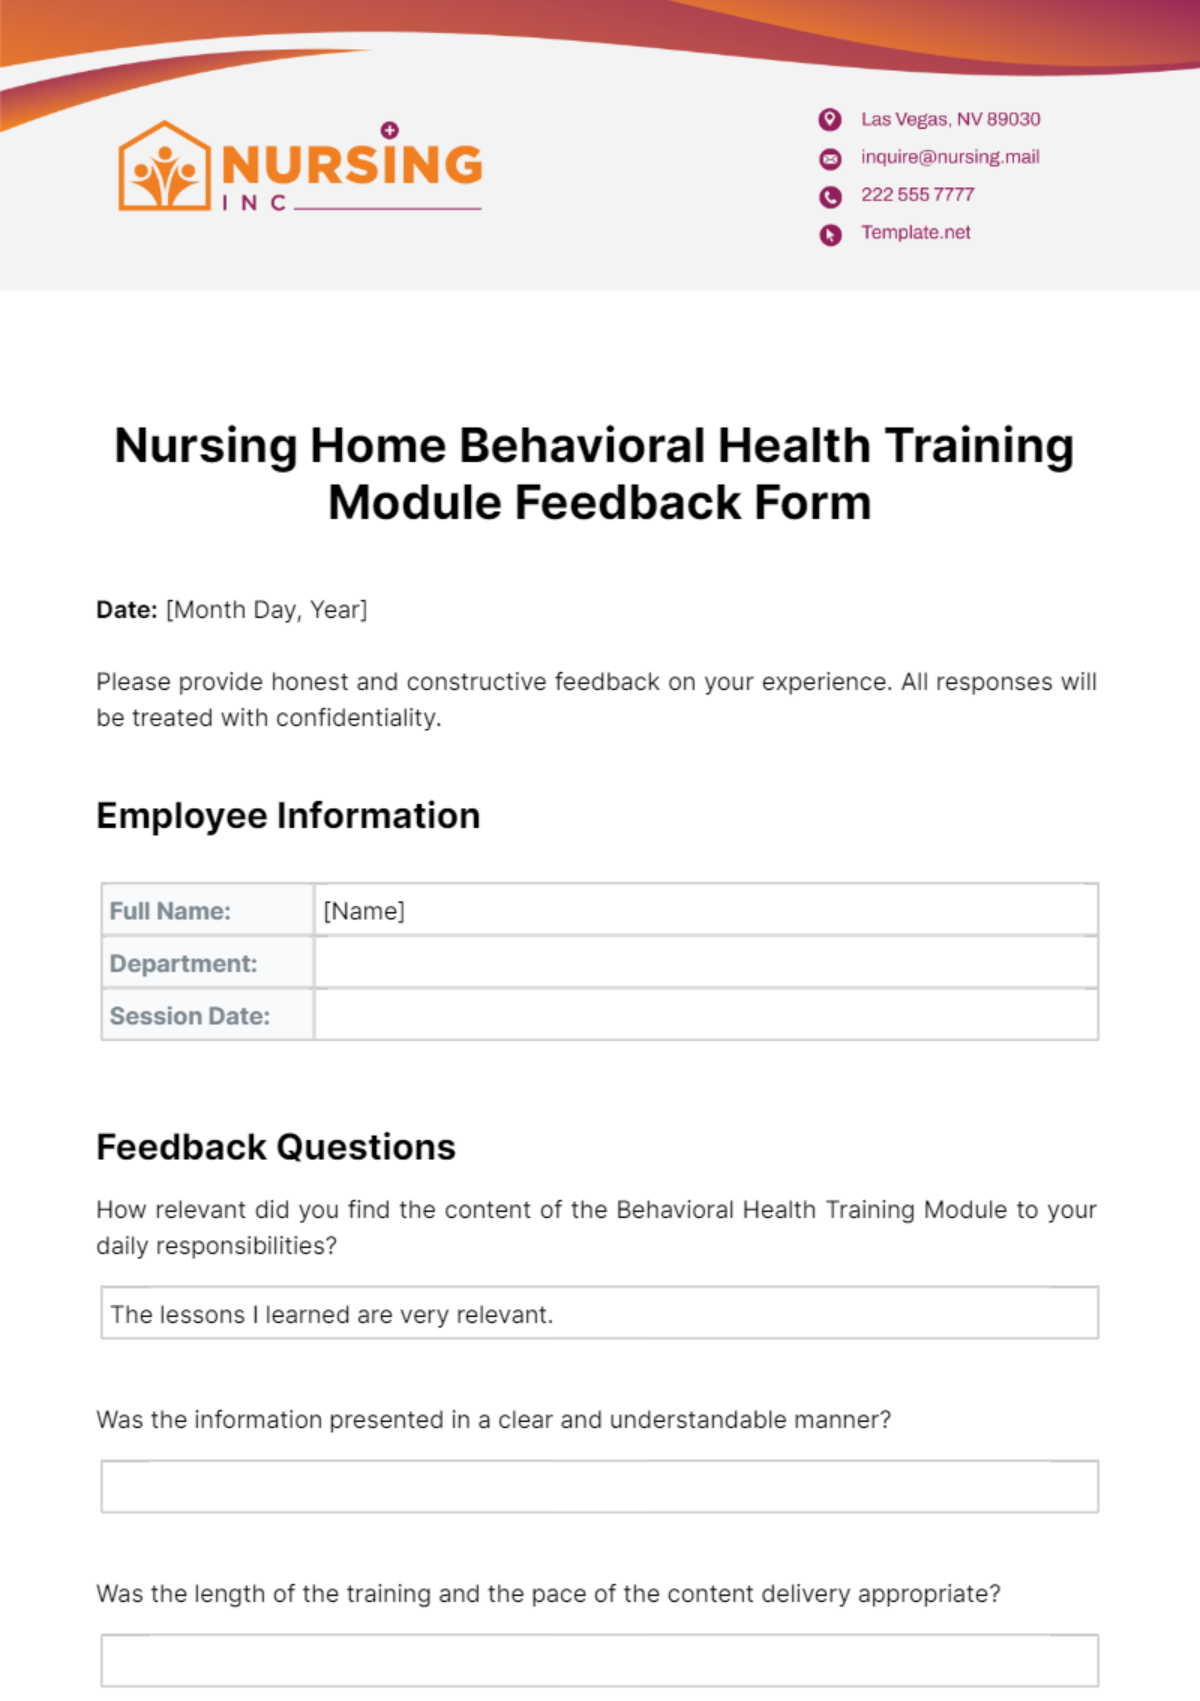 Free Nursing Home Behavioral Health Training Module Feedback Form Template